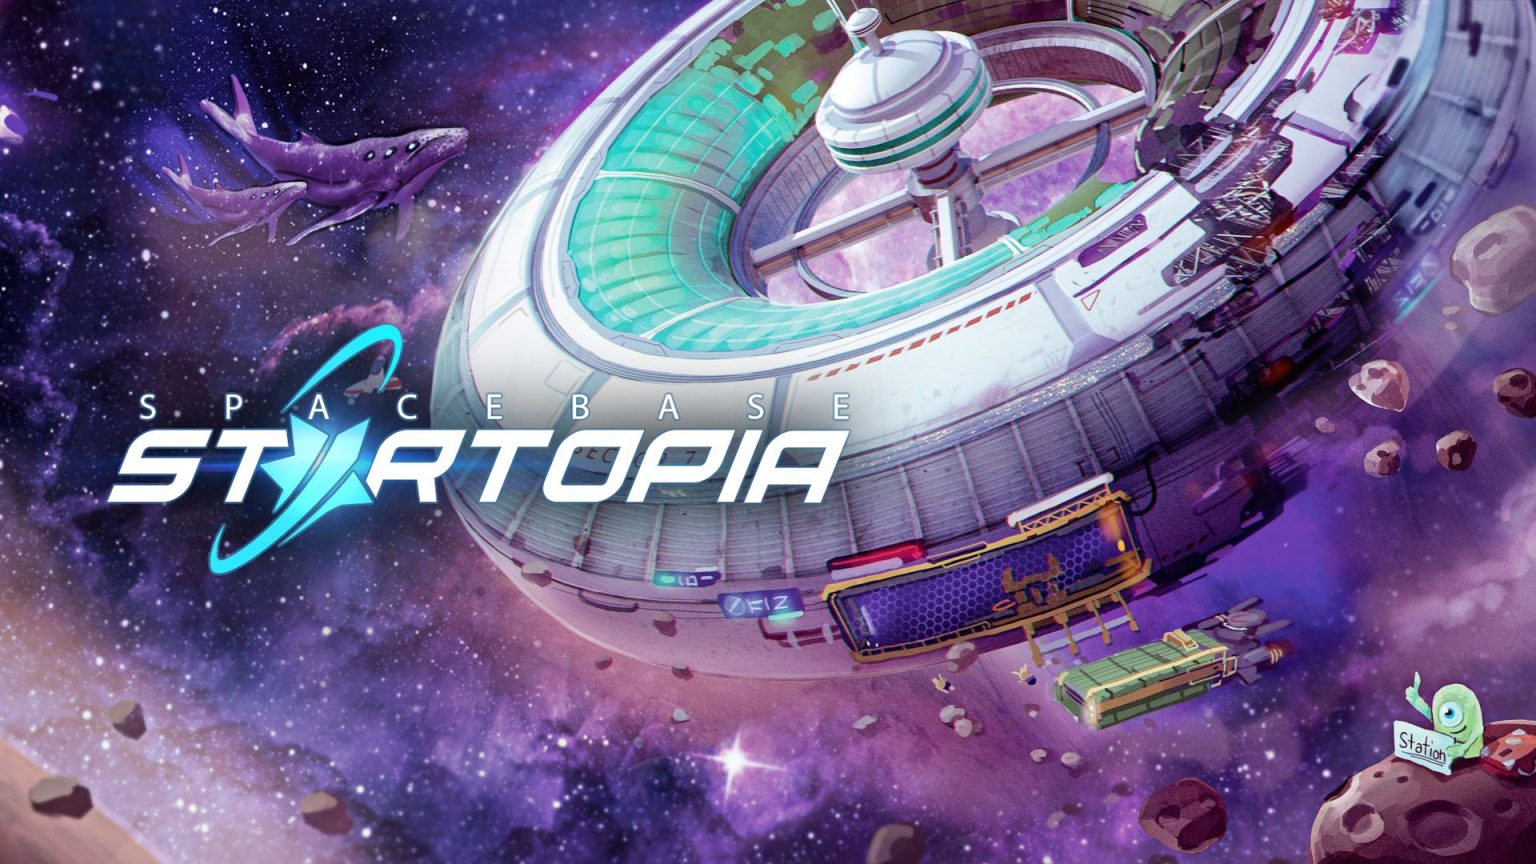 spacebase startopia release date